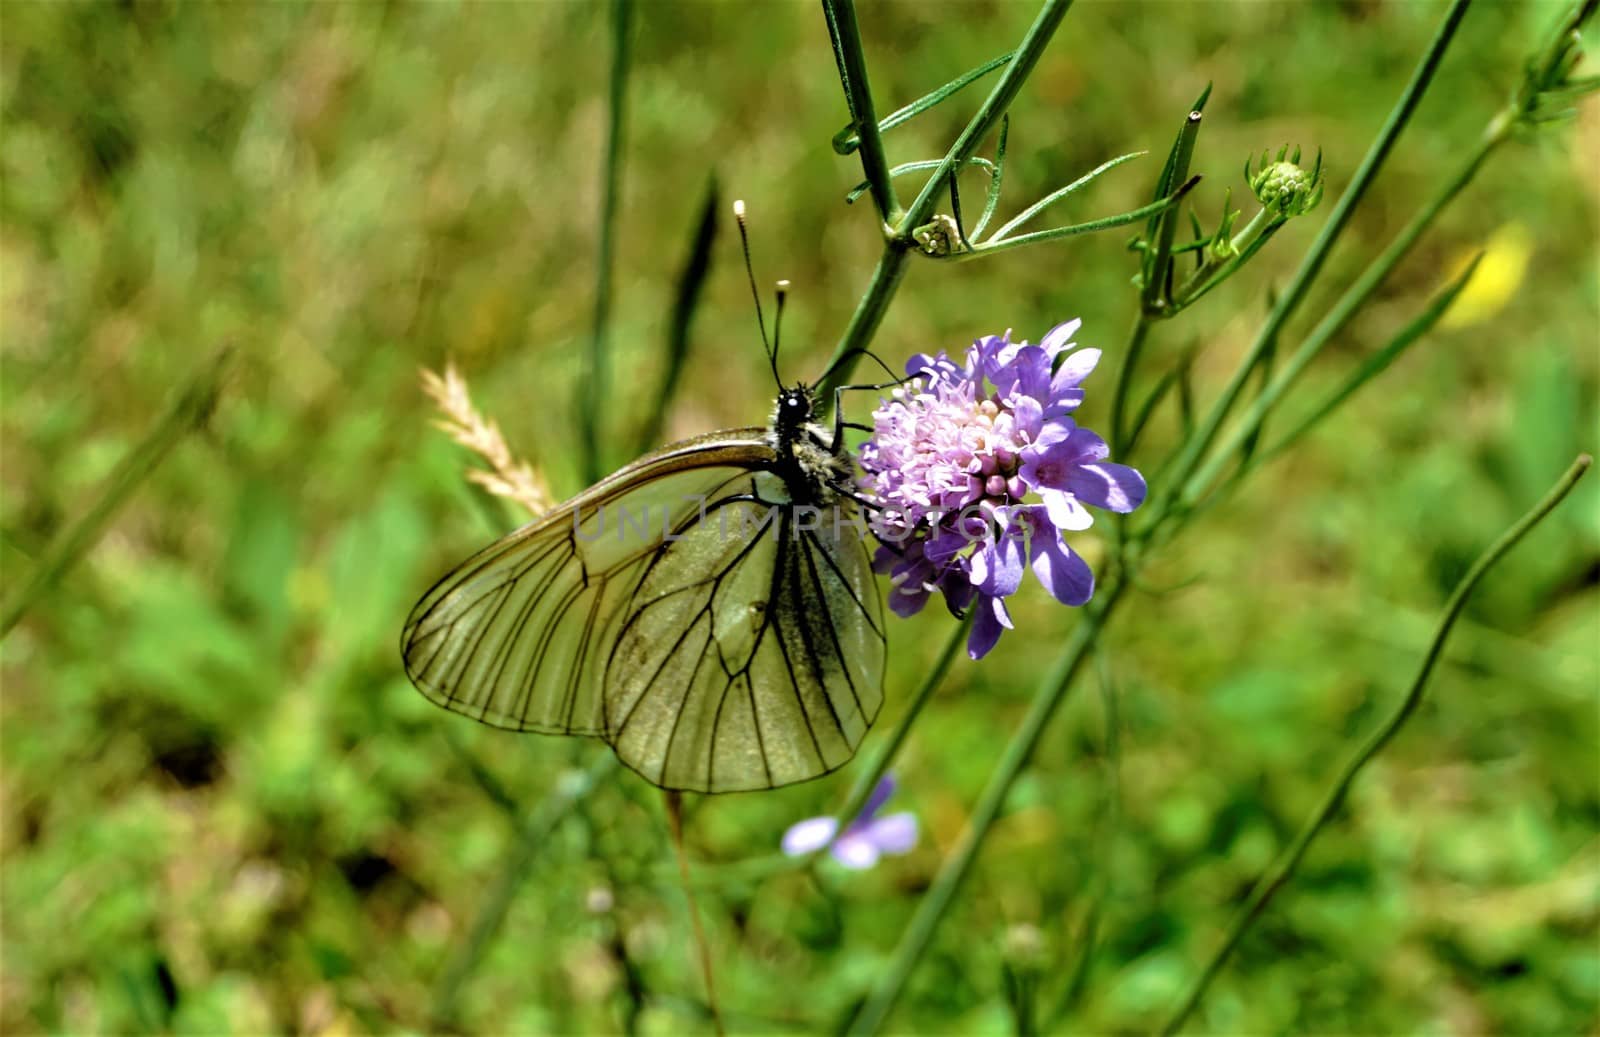 Aporia crataegi butterfly sitting on purple flower